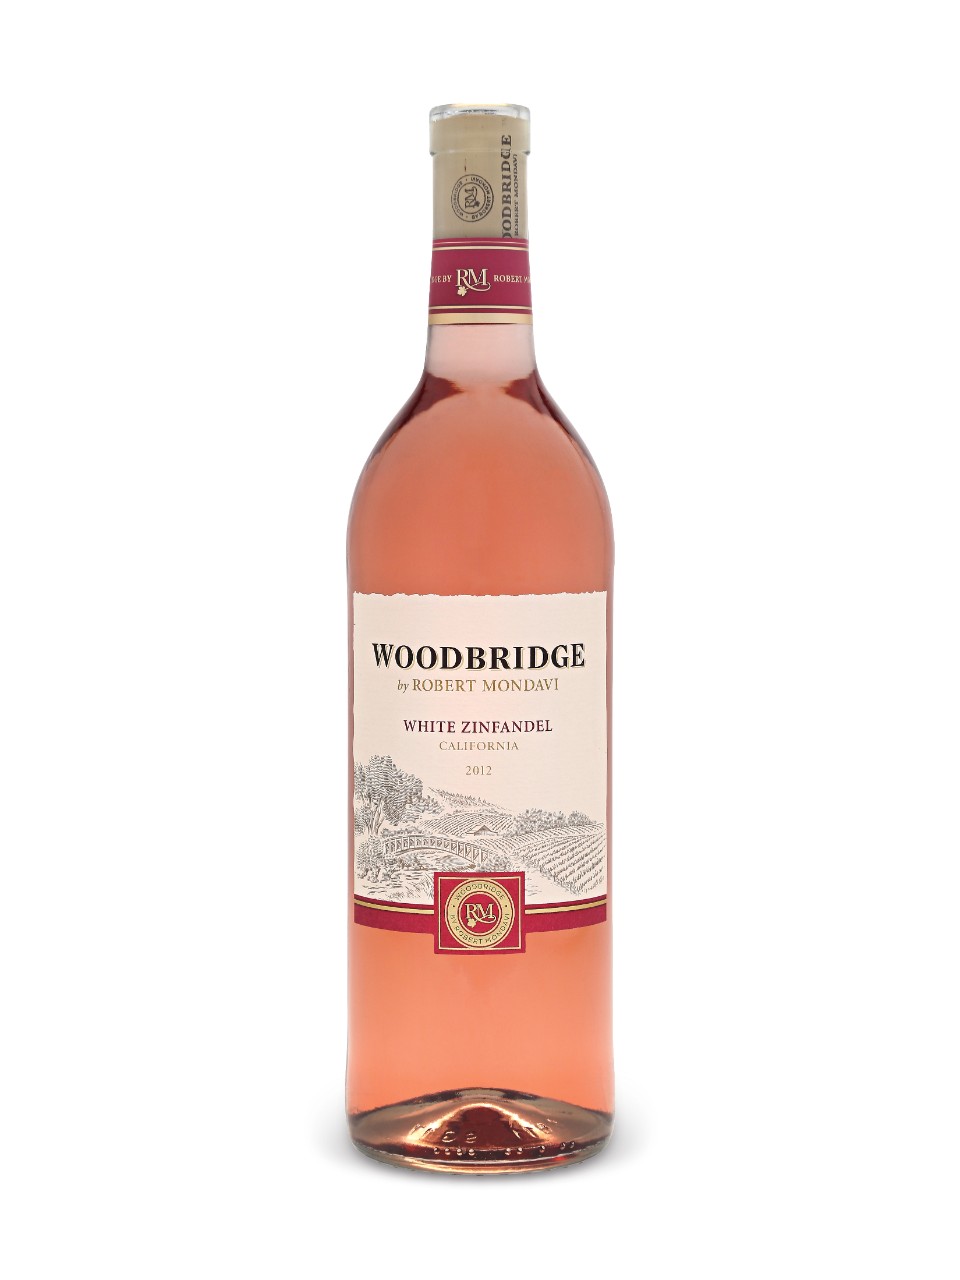 Woodbridge by Robert Mondavi White Zinfandel